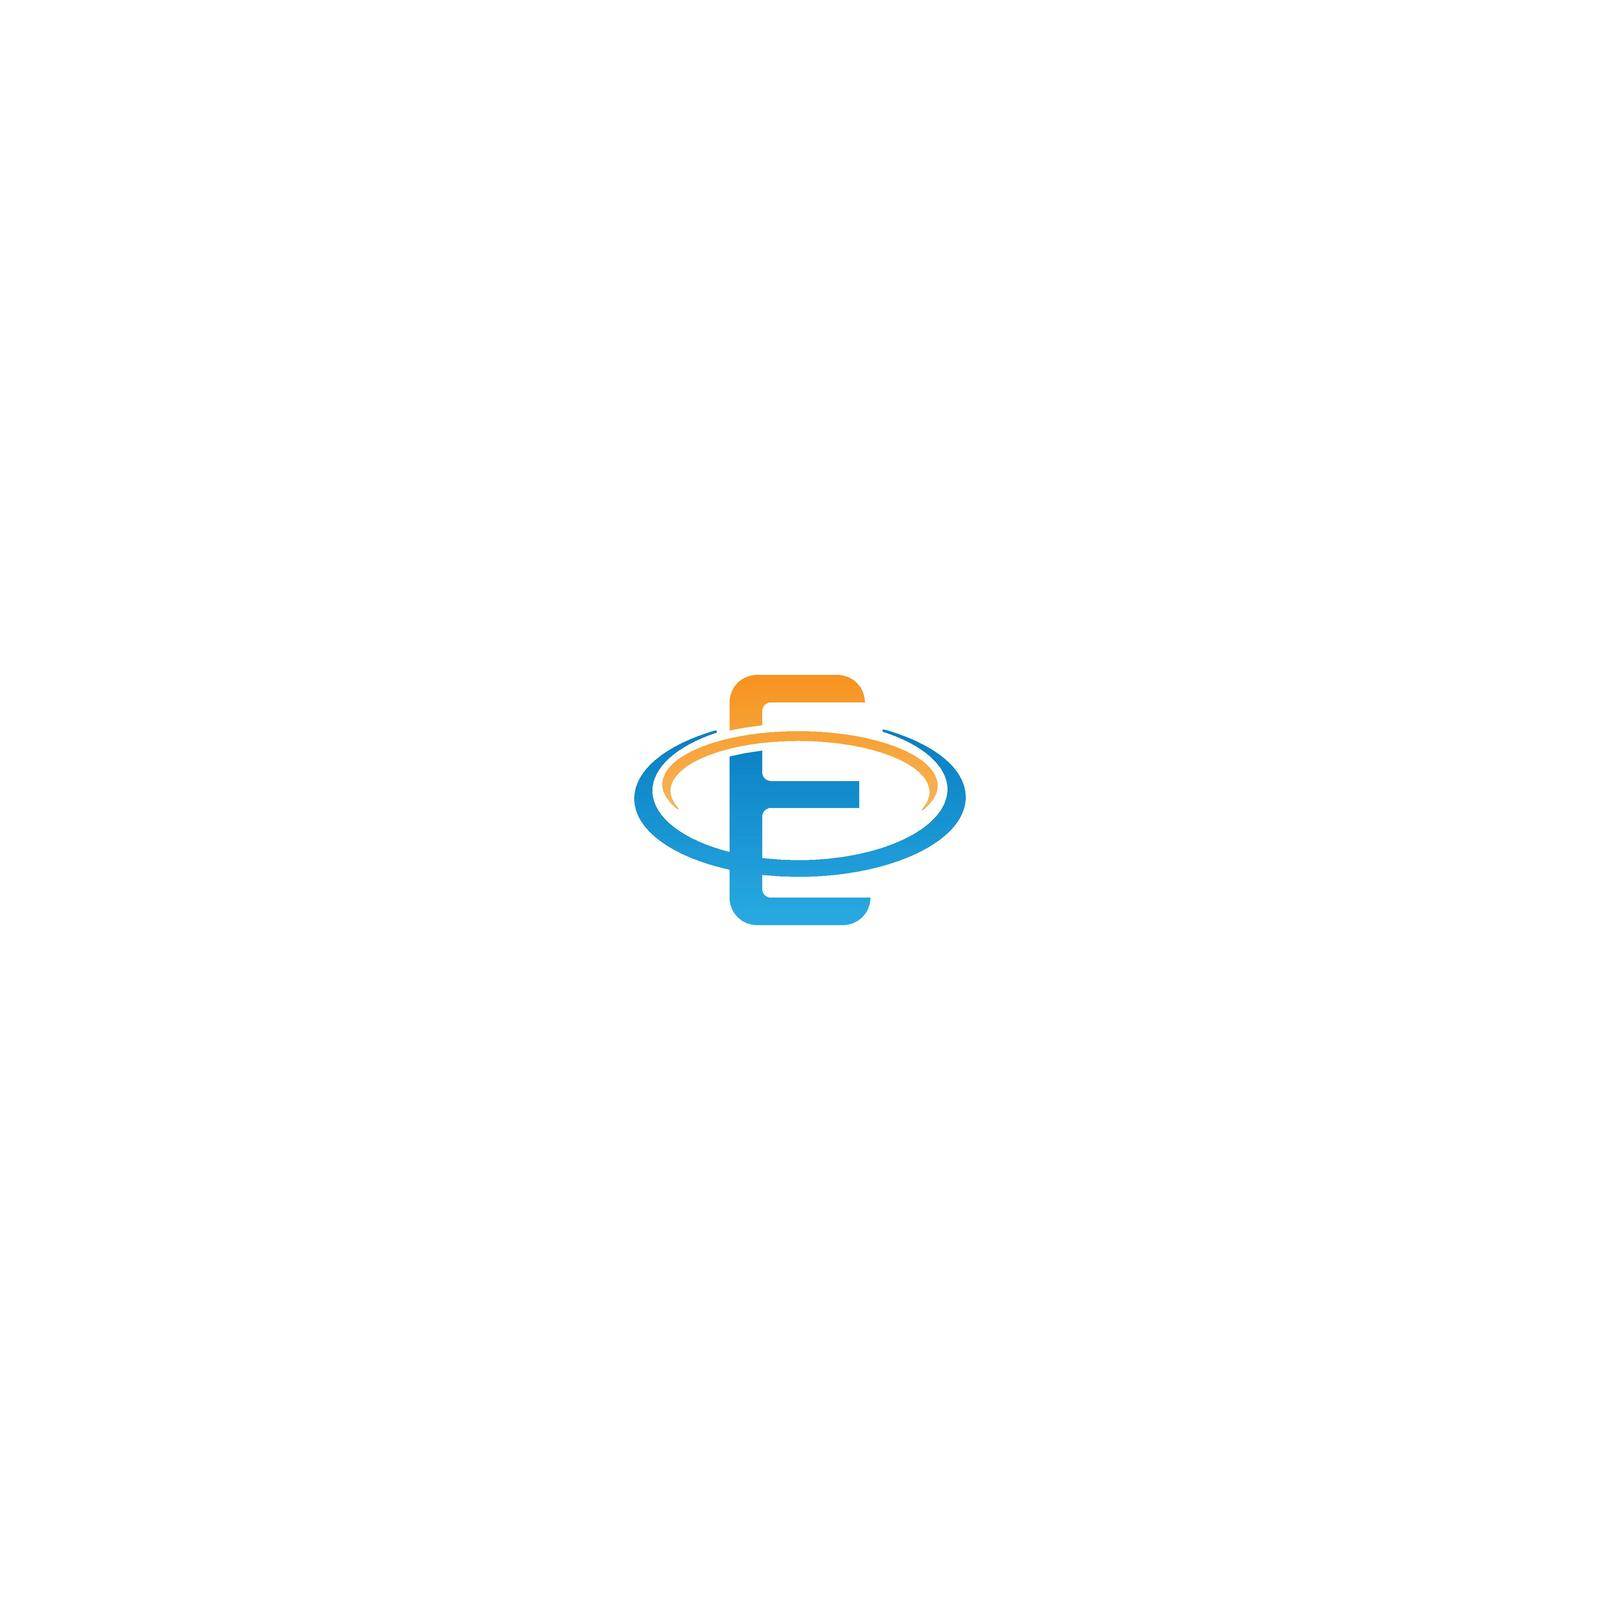 E Letter circle Logo, Concept Letter E + icon circle illustration by bellaxbudhong3